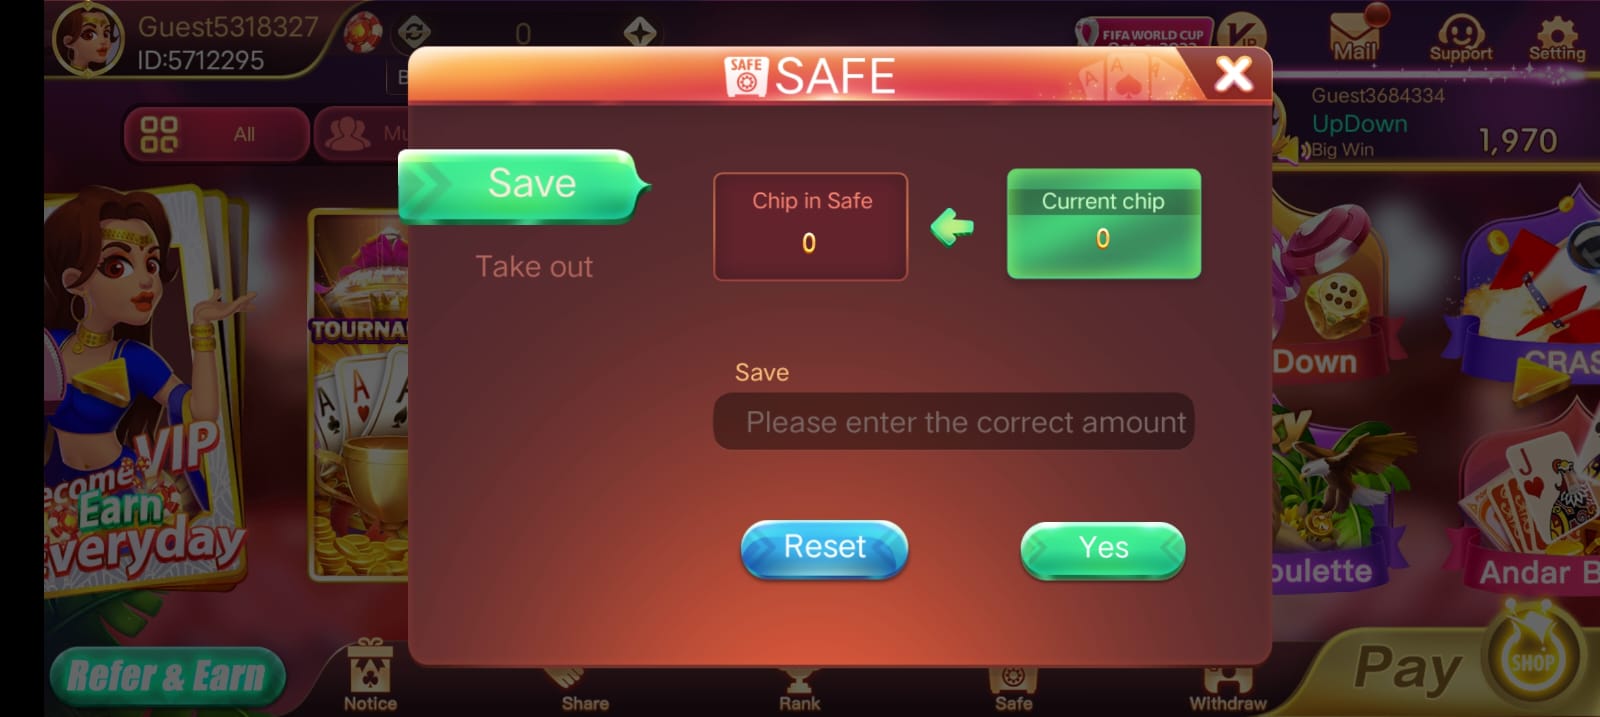 Safe Button Program In Rummy Loot App